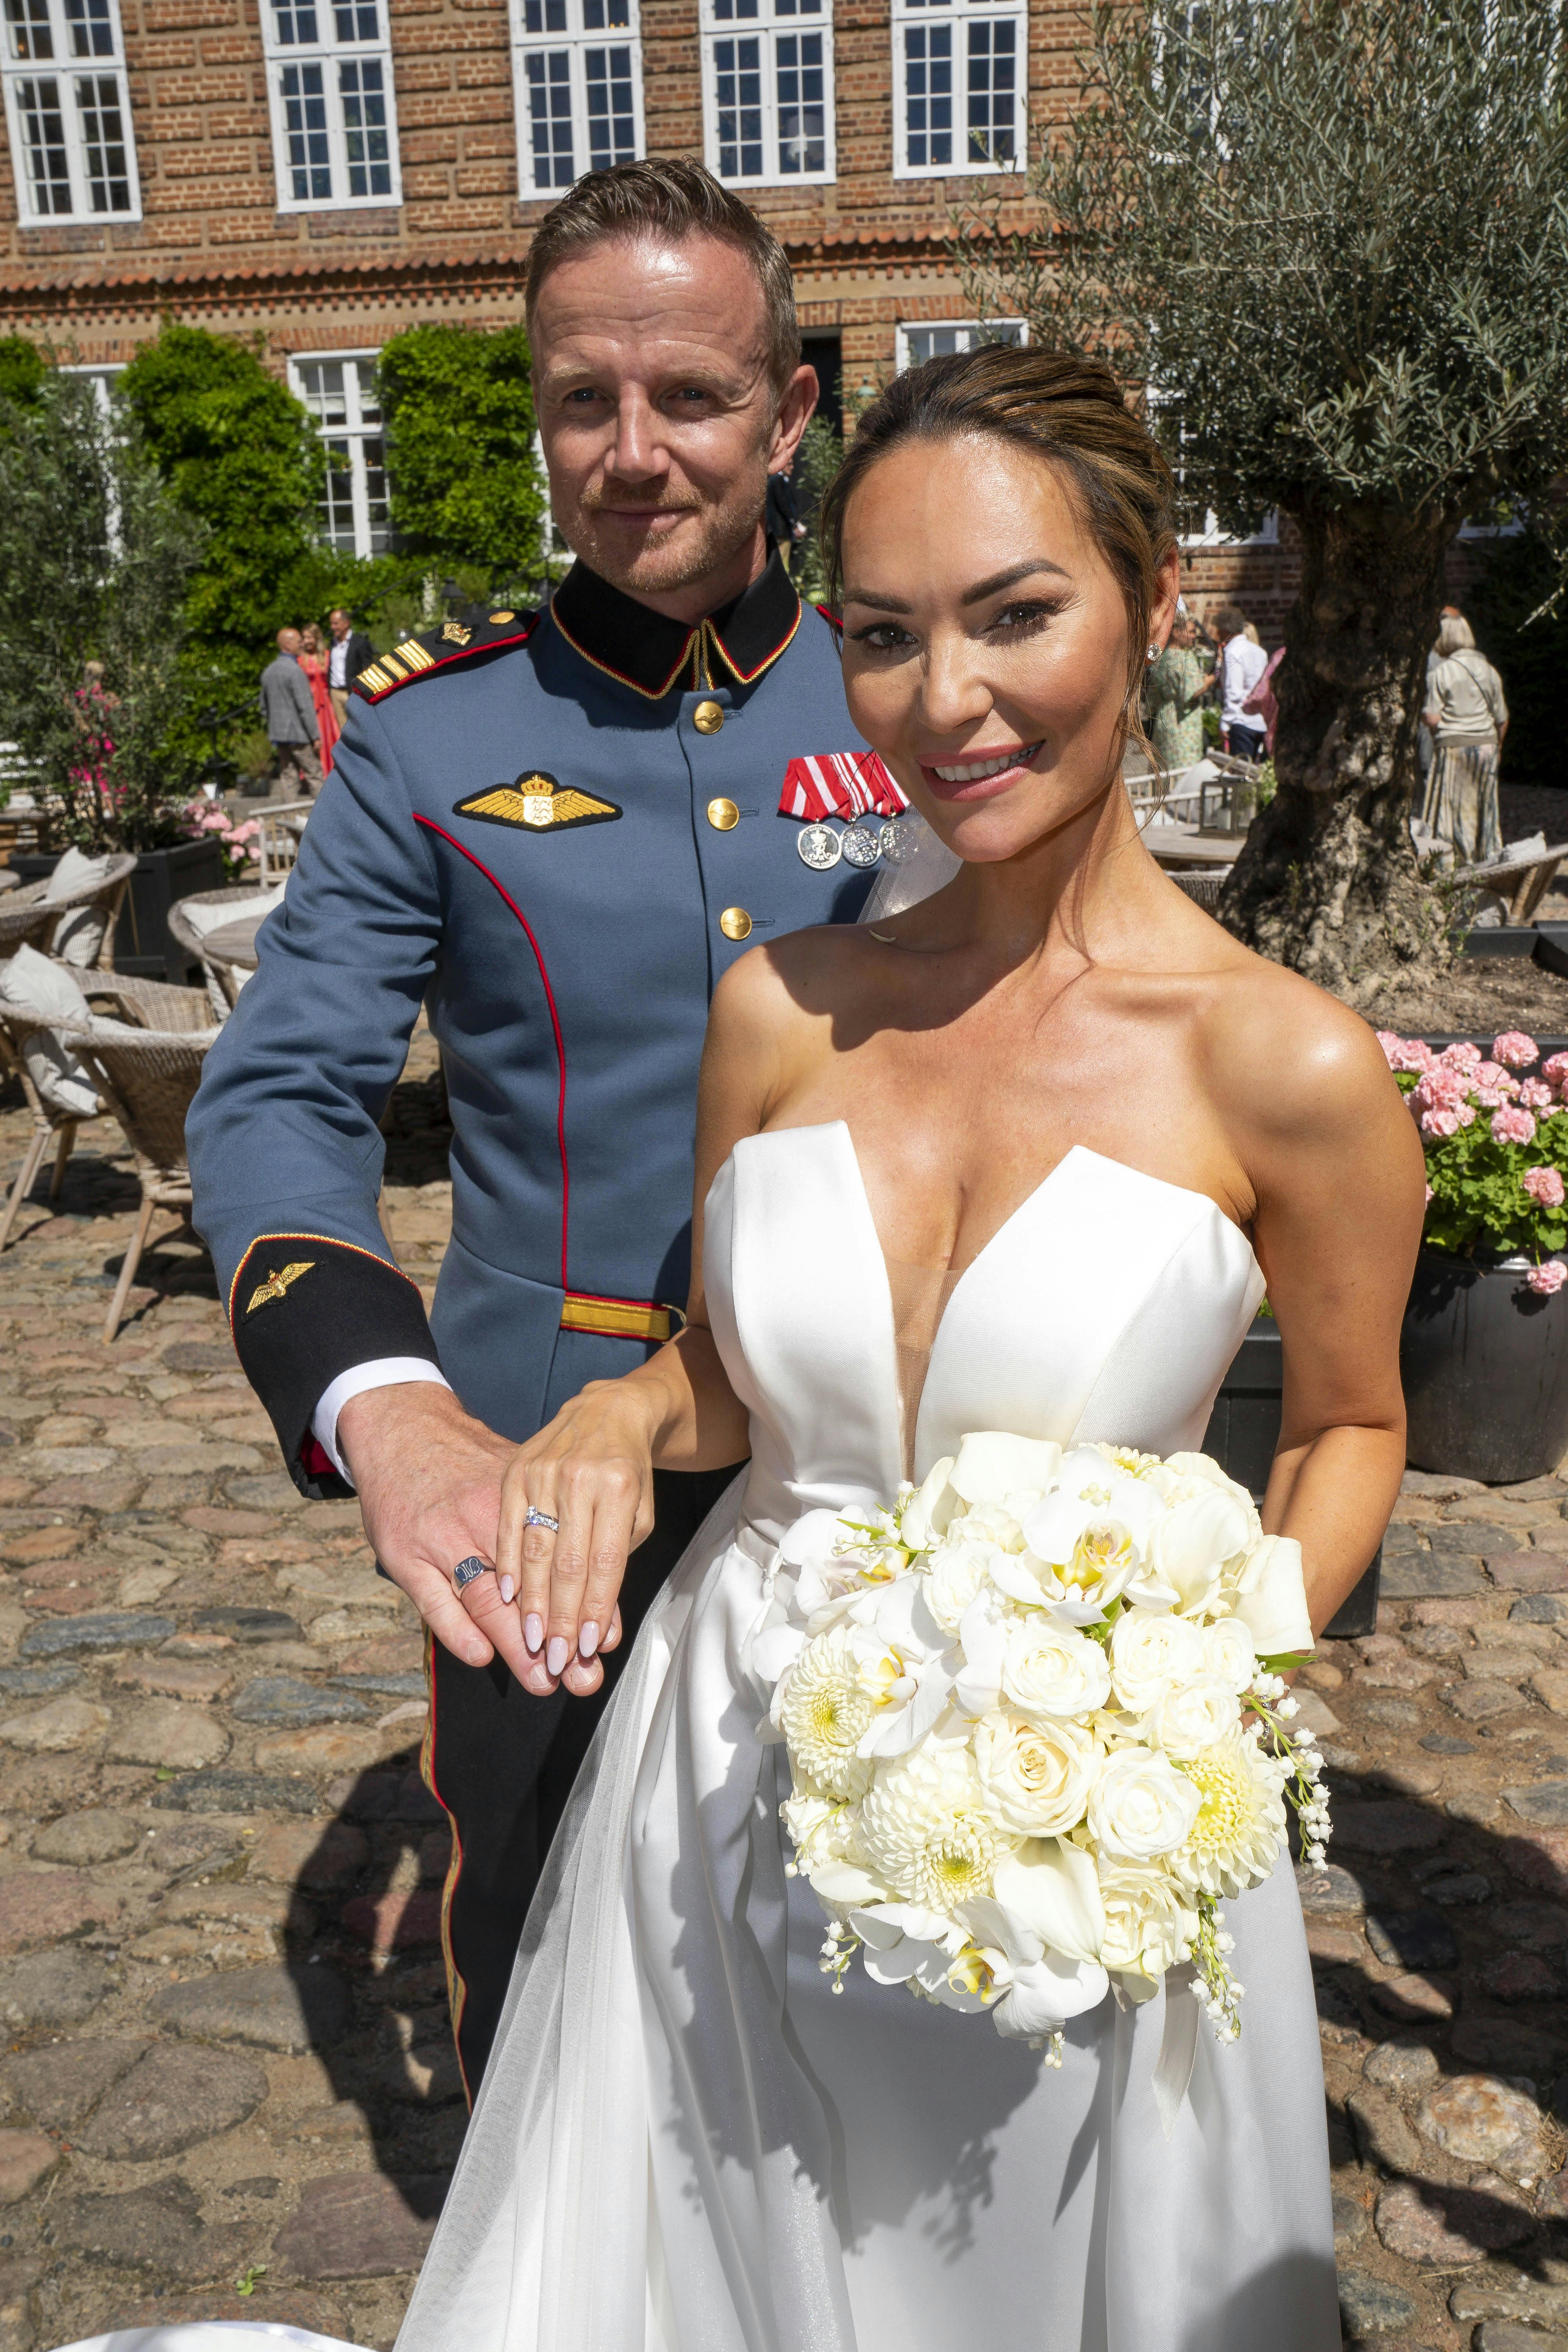 Mascha Vang og Troels Krohn Dehli, nu Vang, blev viet 2. august 2022 ved et storslået bryllup på Holckenhavn Slot ved Nyborg på Fyn.&nbsp;
